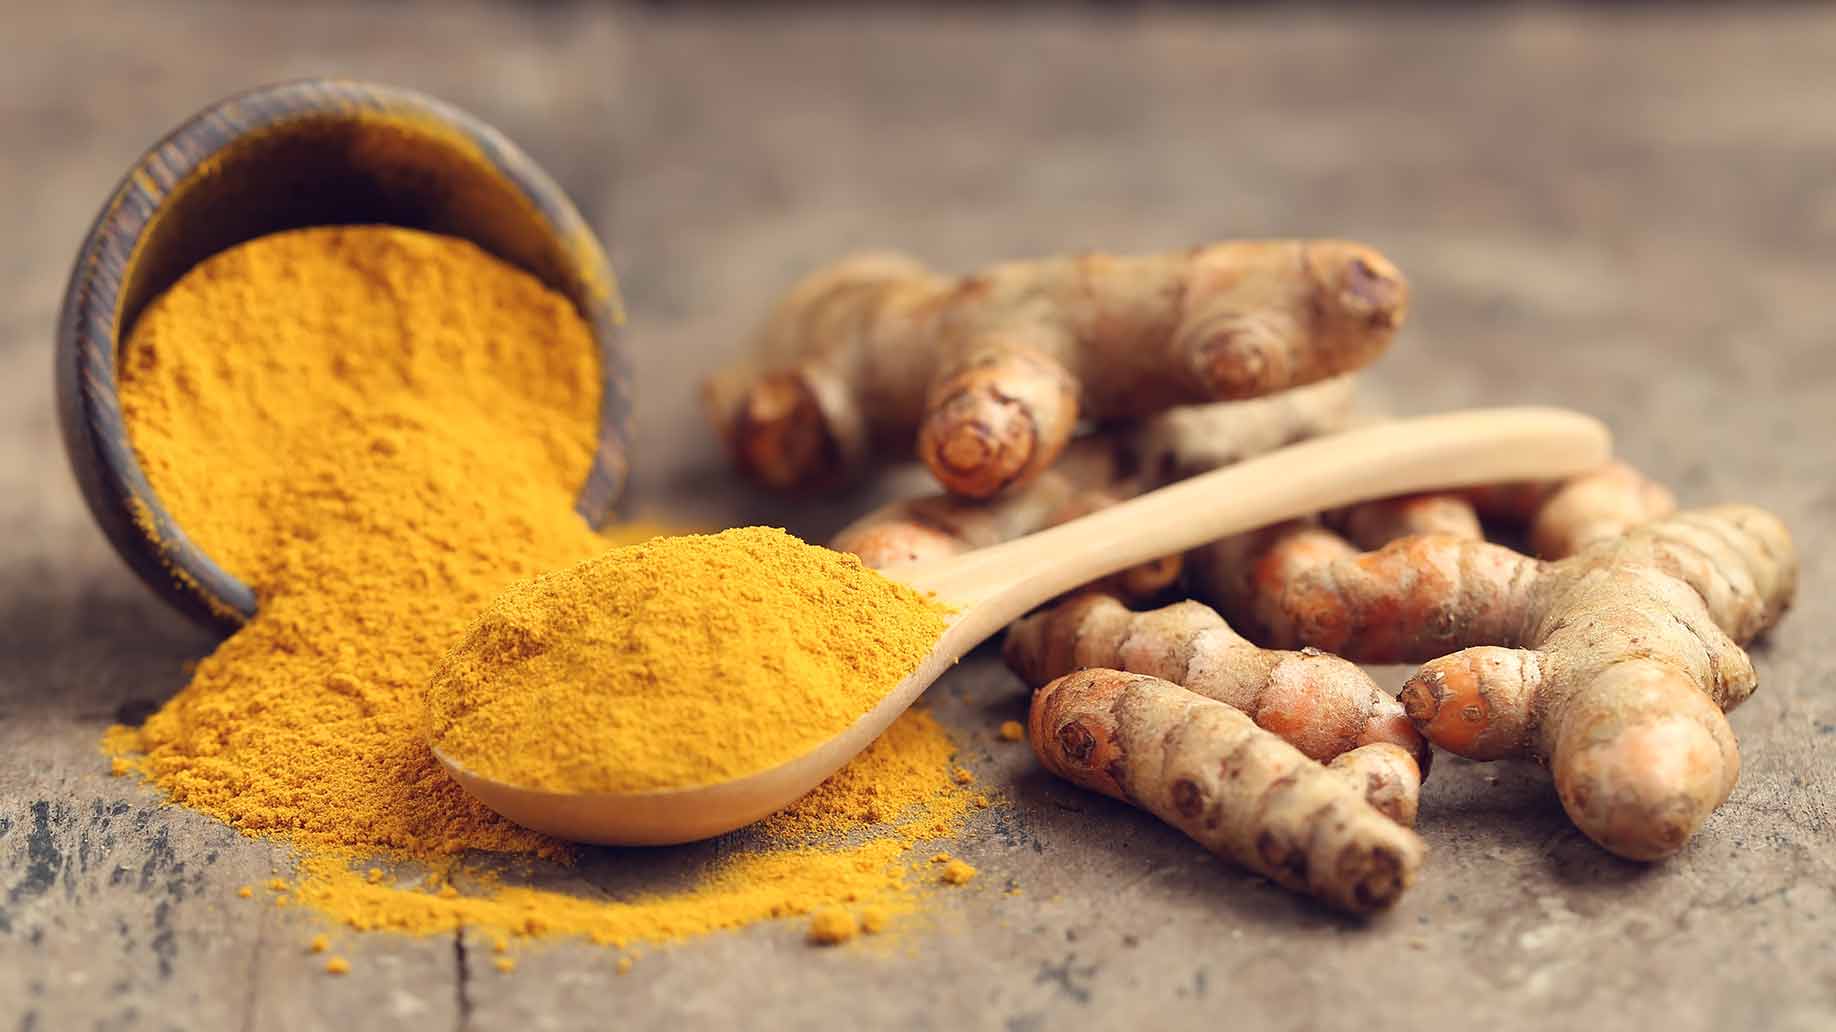 turmeric curcumin yellow orange spice powder root natural health benefits remedies